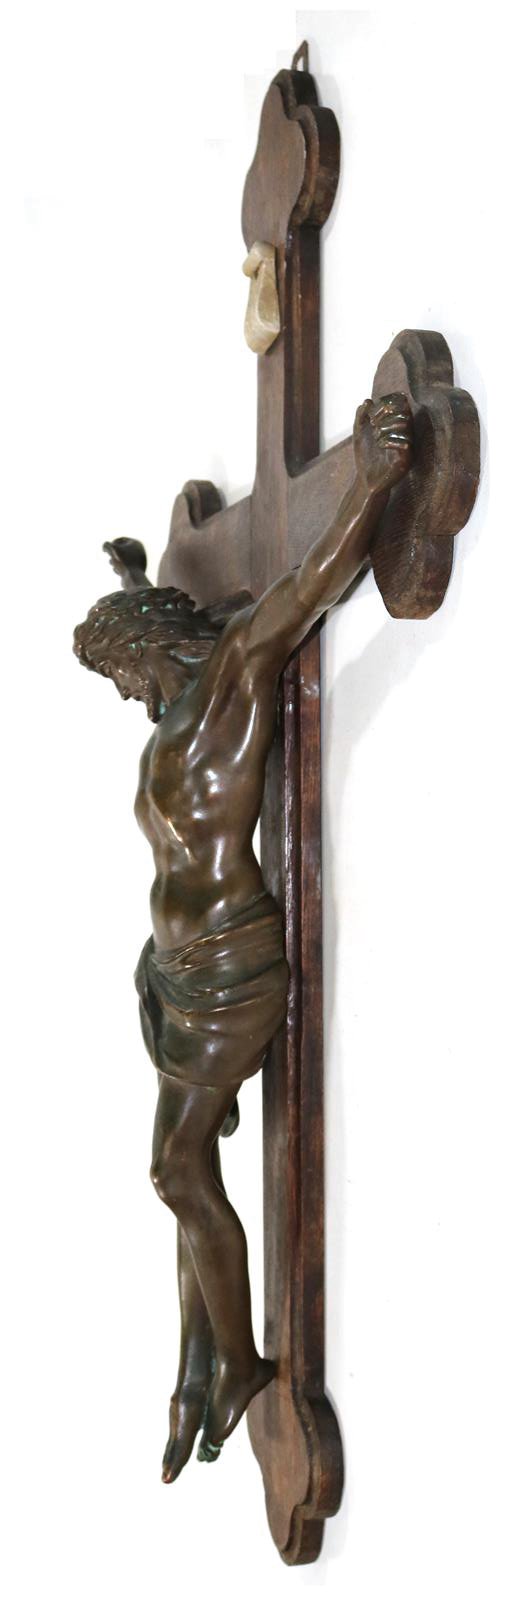 Christus, Kruzifix. | Bild Nr.2